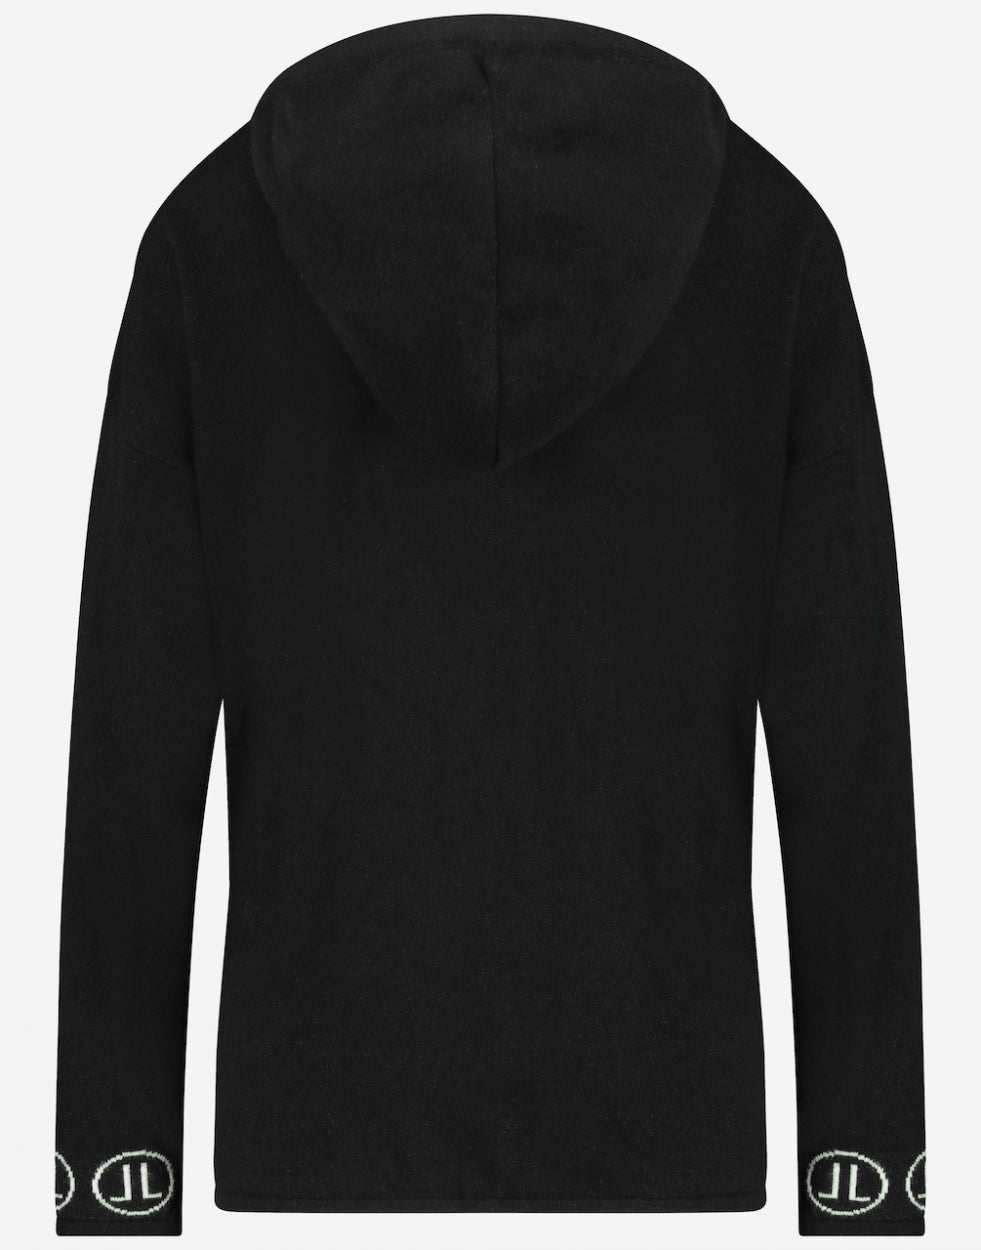 Sweater JL | Black